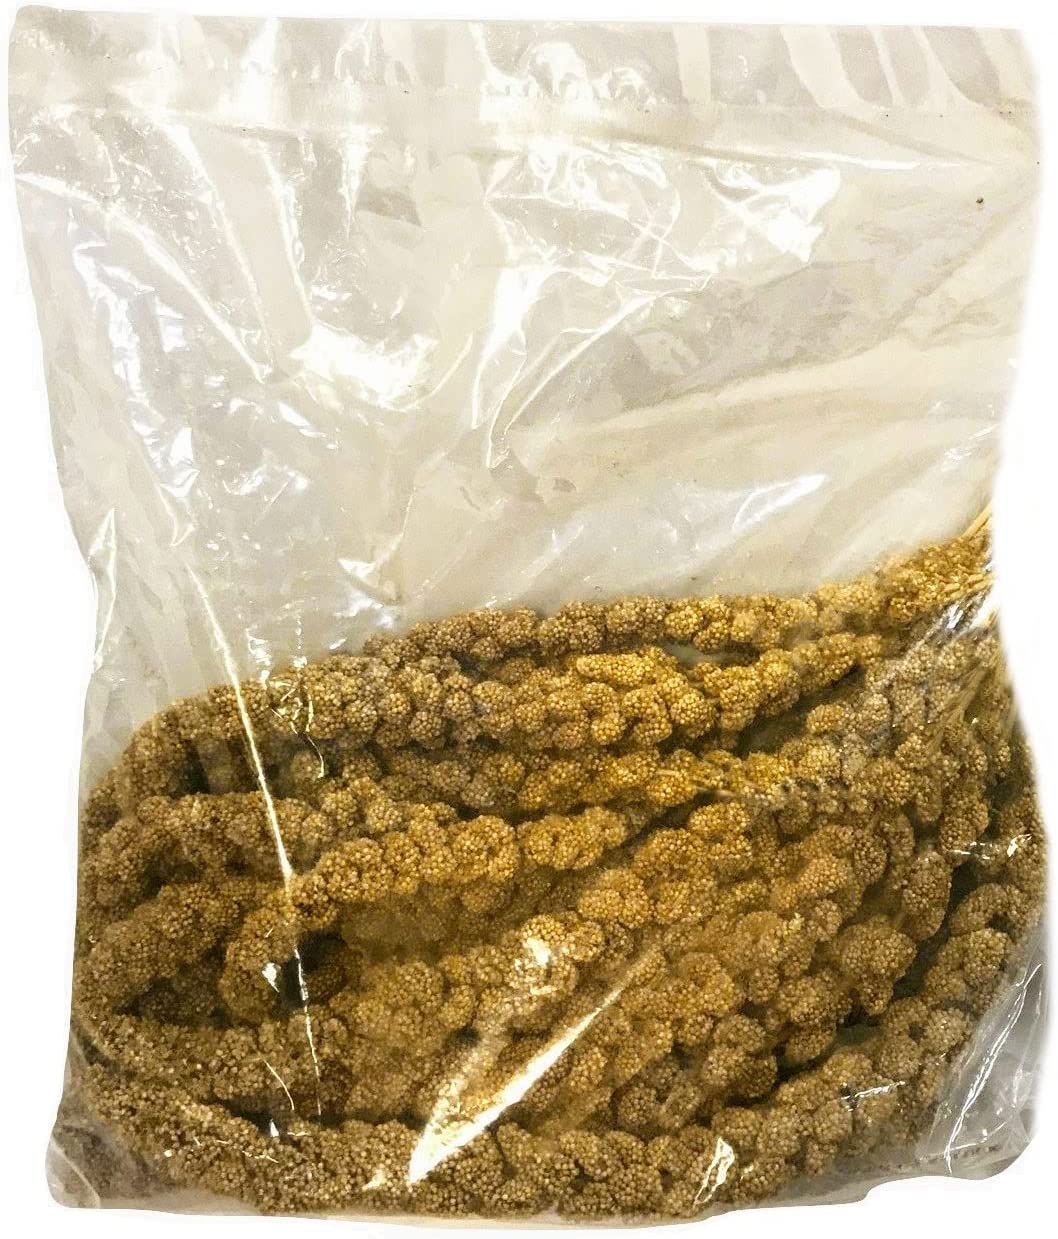 Big fresh Spray Millet by Nemeth Farms shown in 1 pound bag